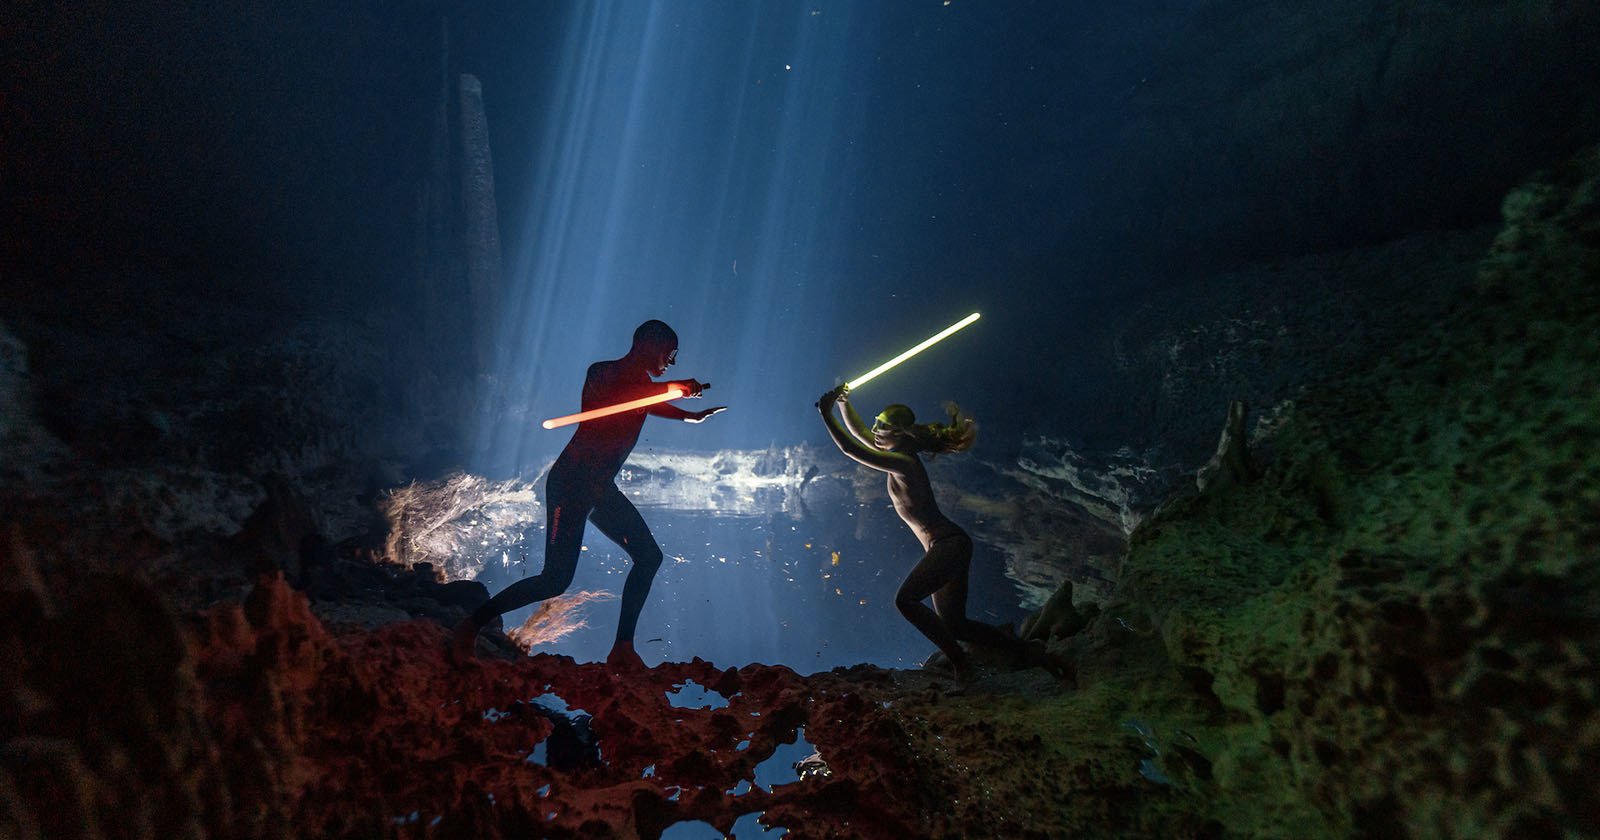  freediving photographer captures underwater lightsaber battle 